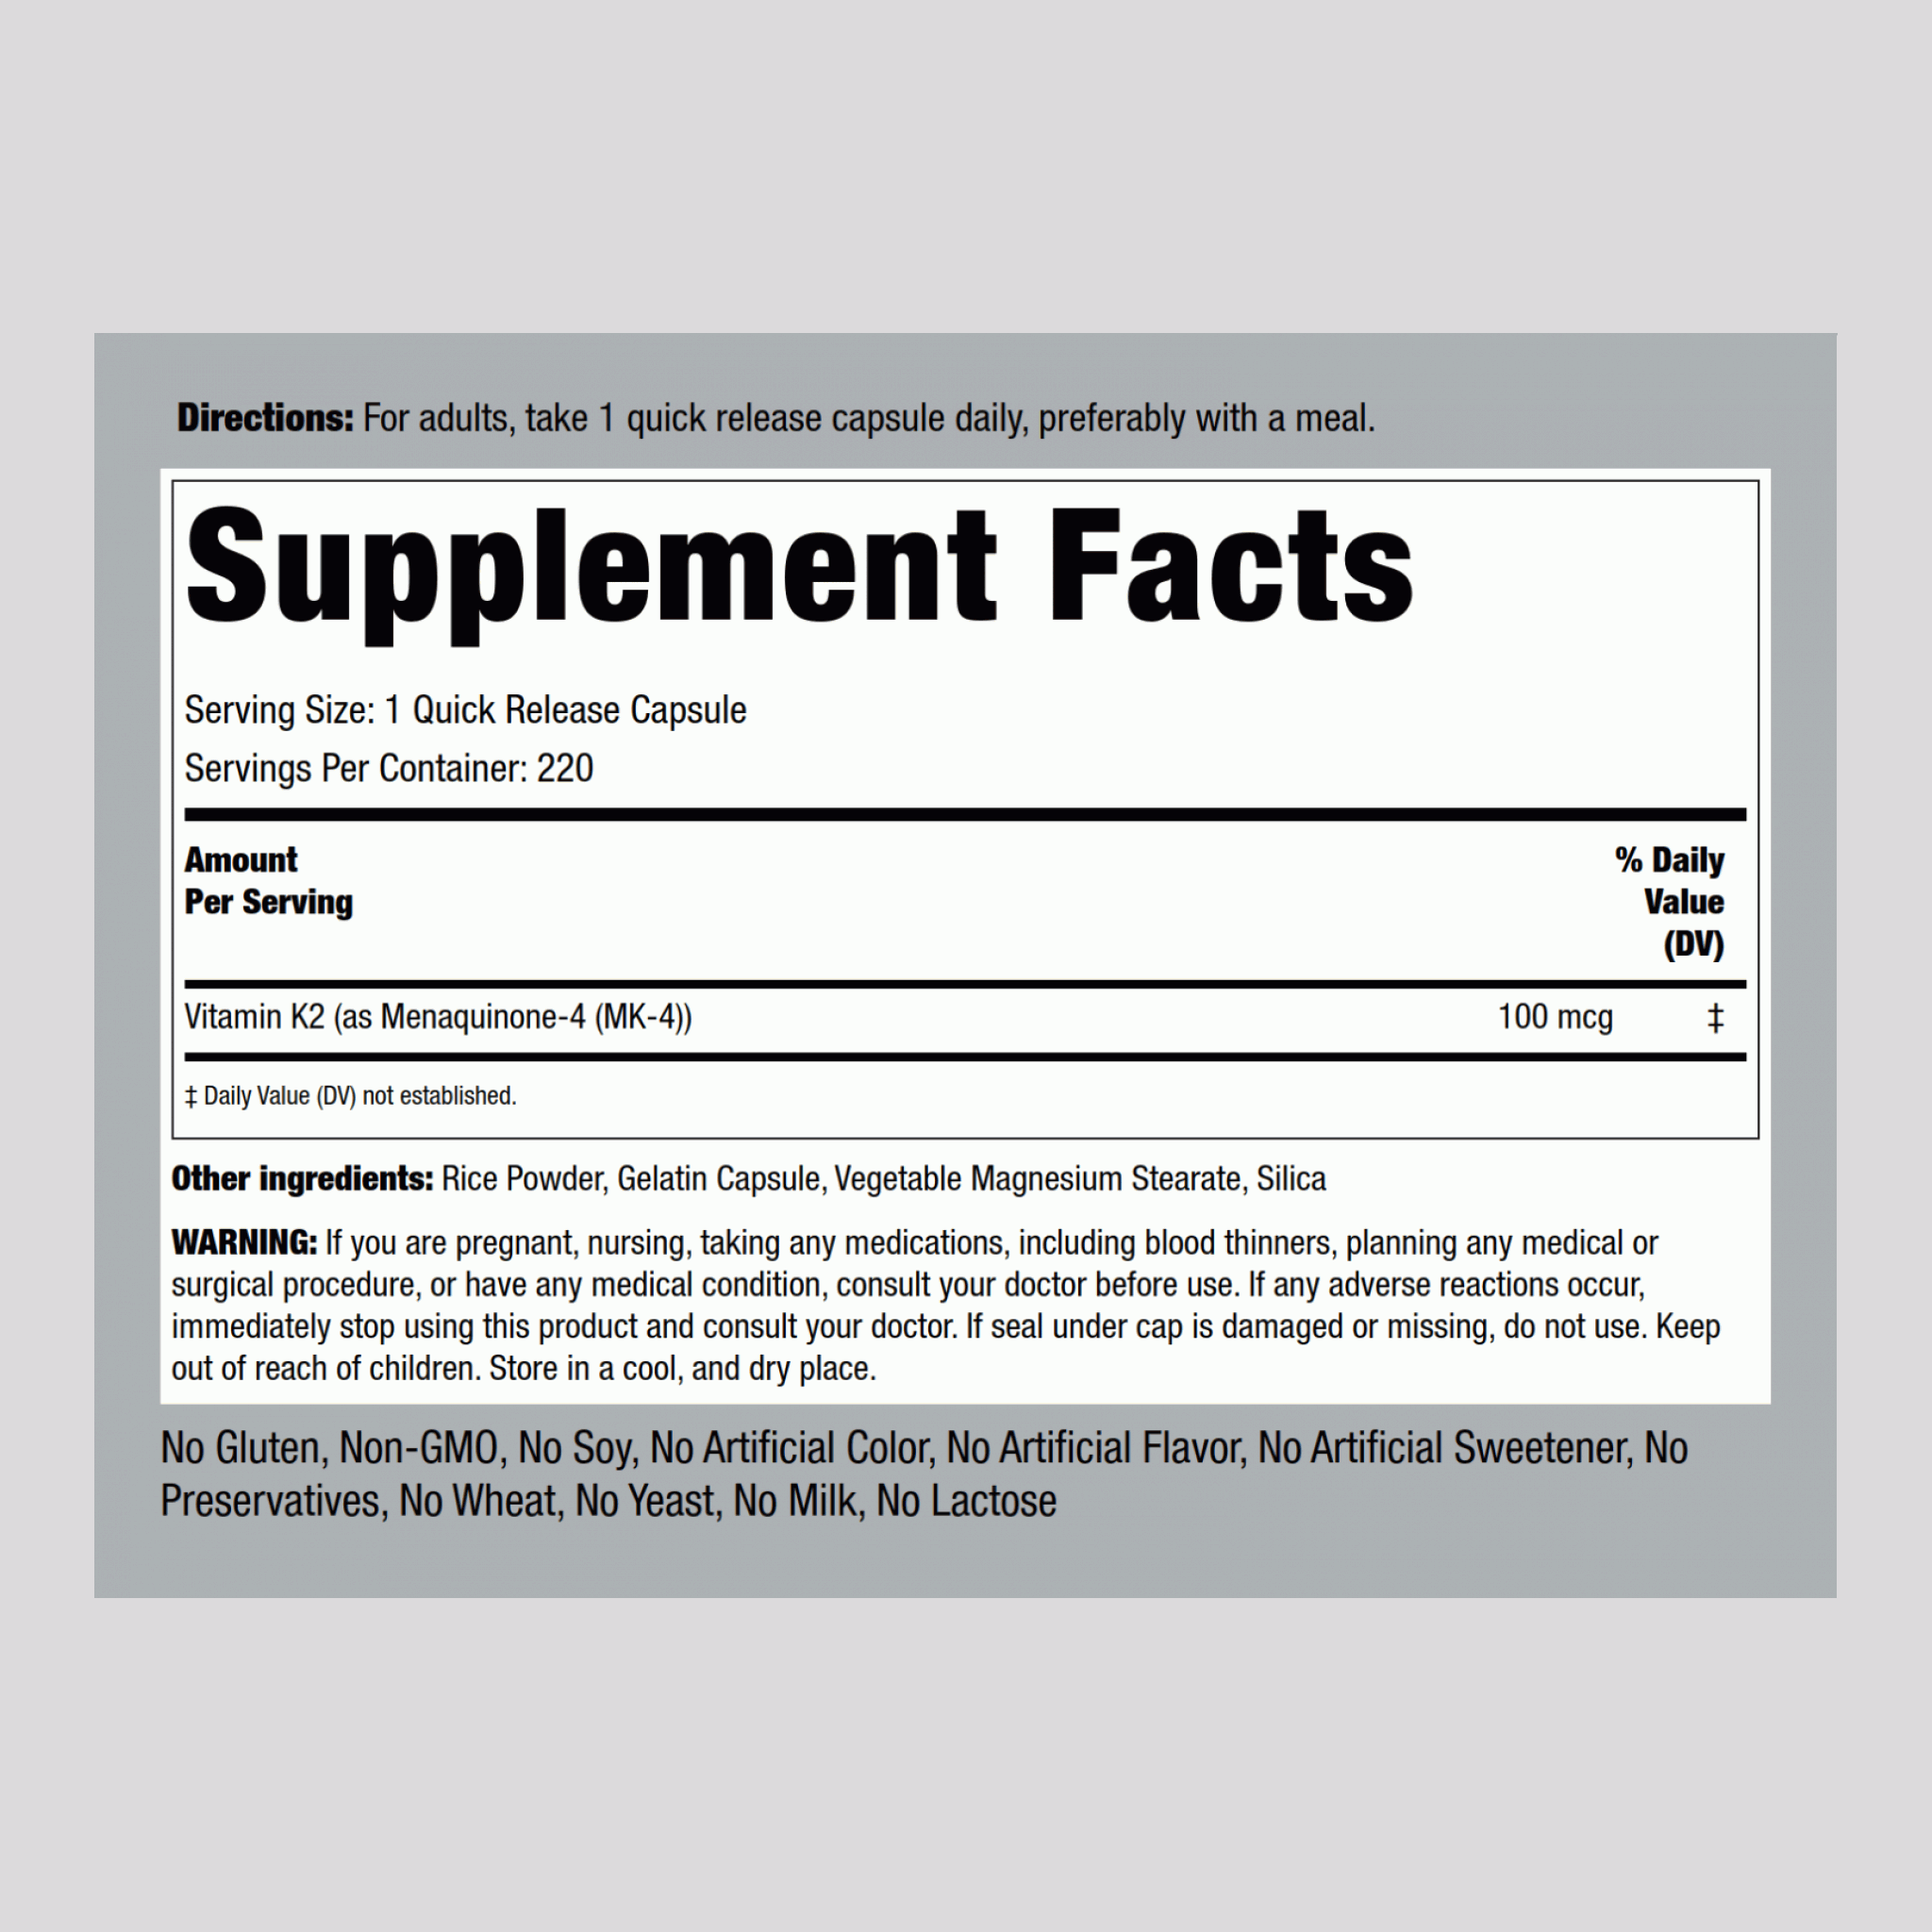 Vitamin K-2 with MK-4, 100 mcg, 220 Capsules